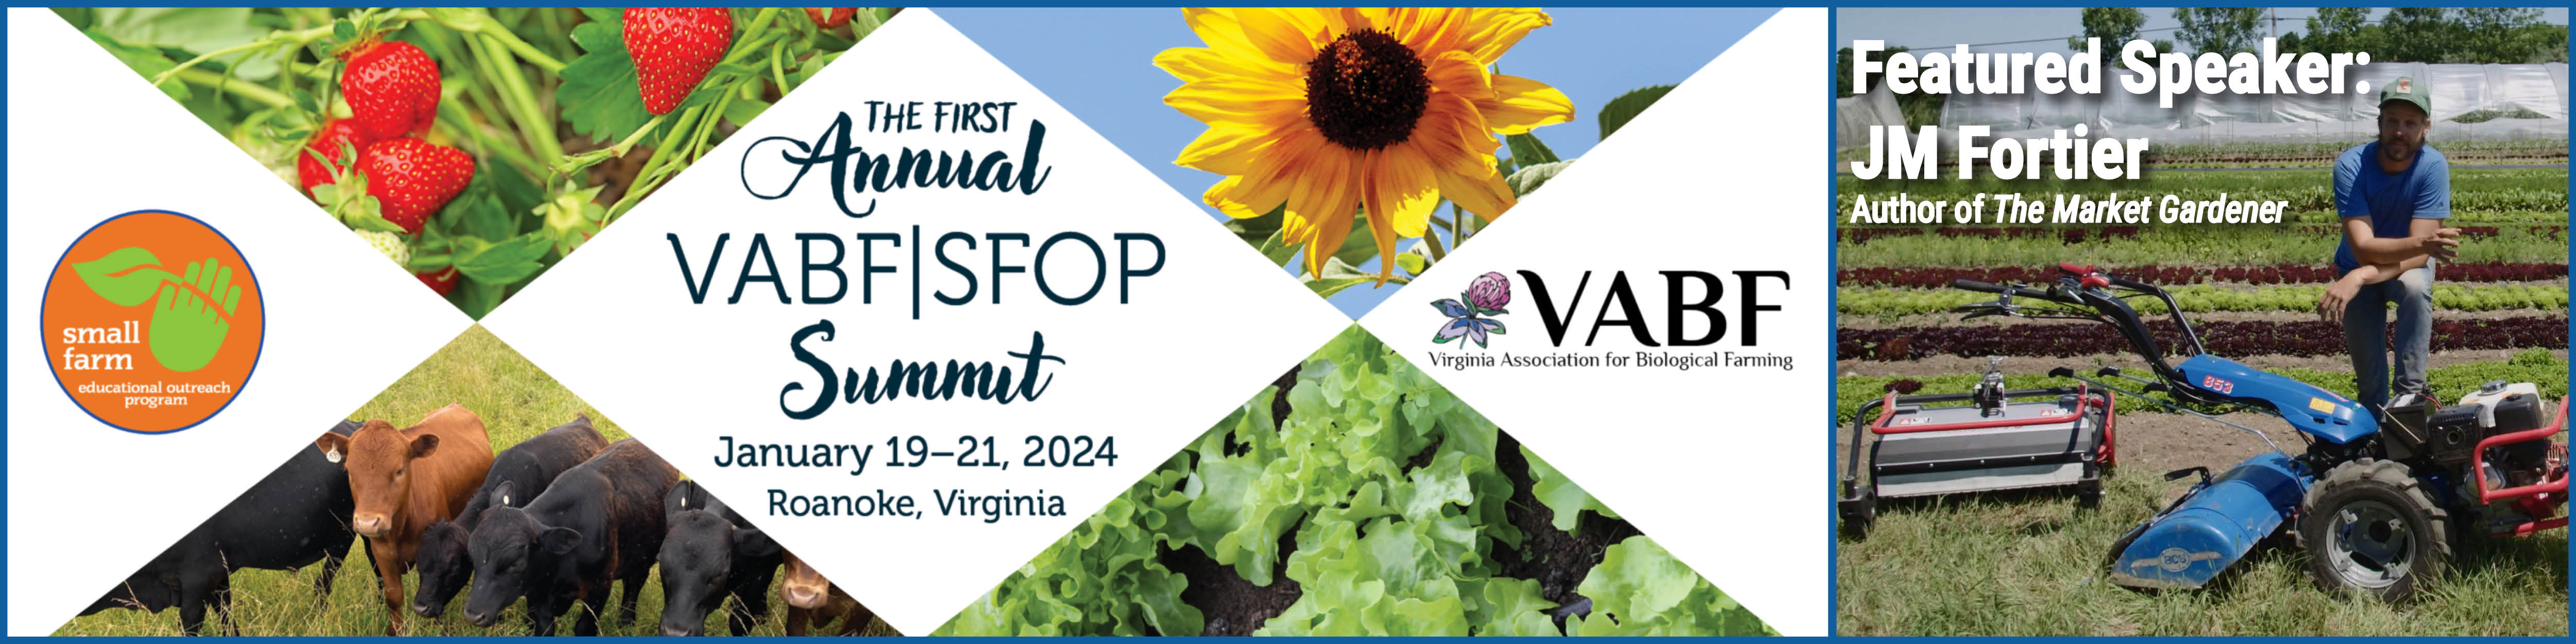 VABF-SFOP Summit - Roanoke, VA